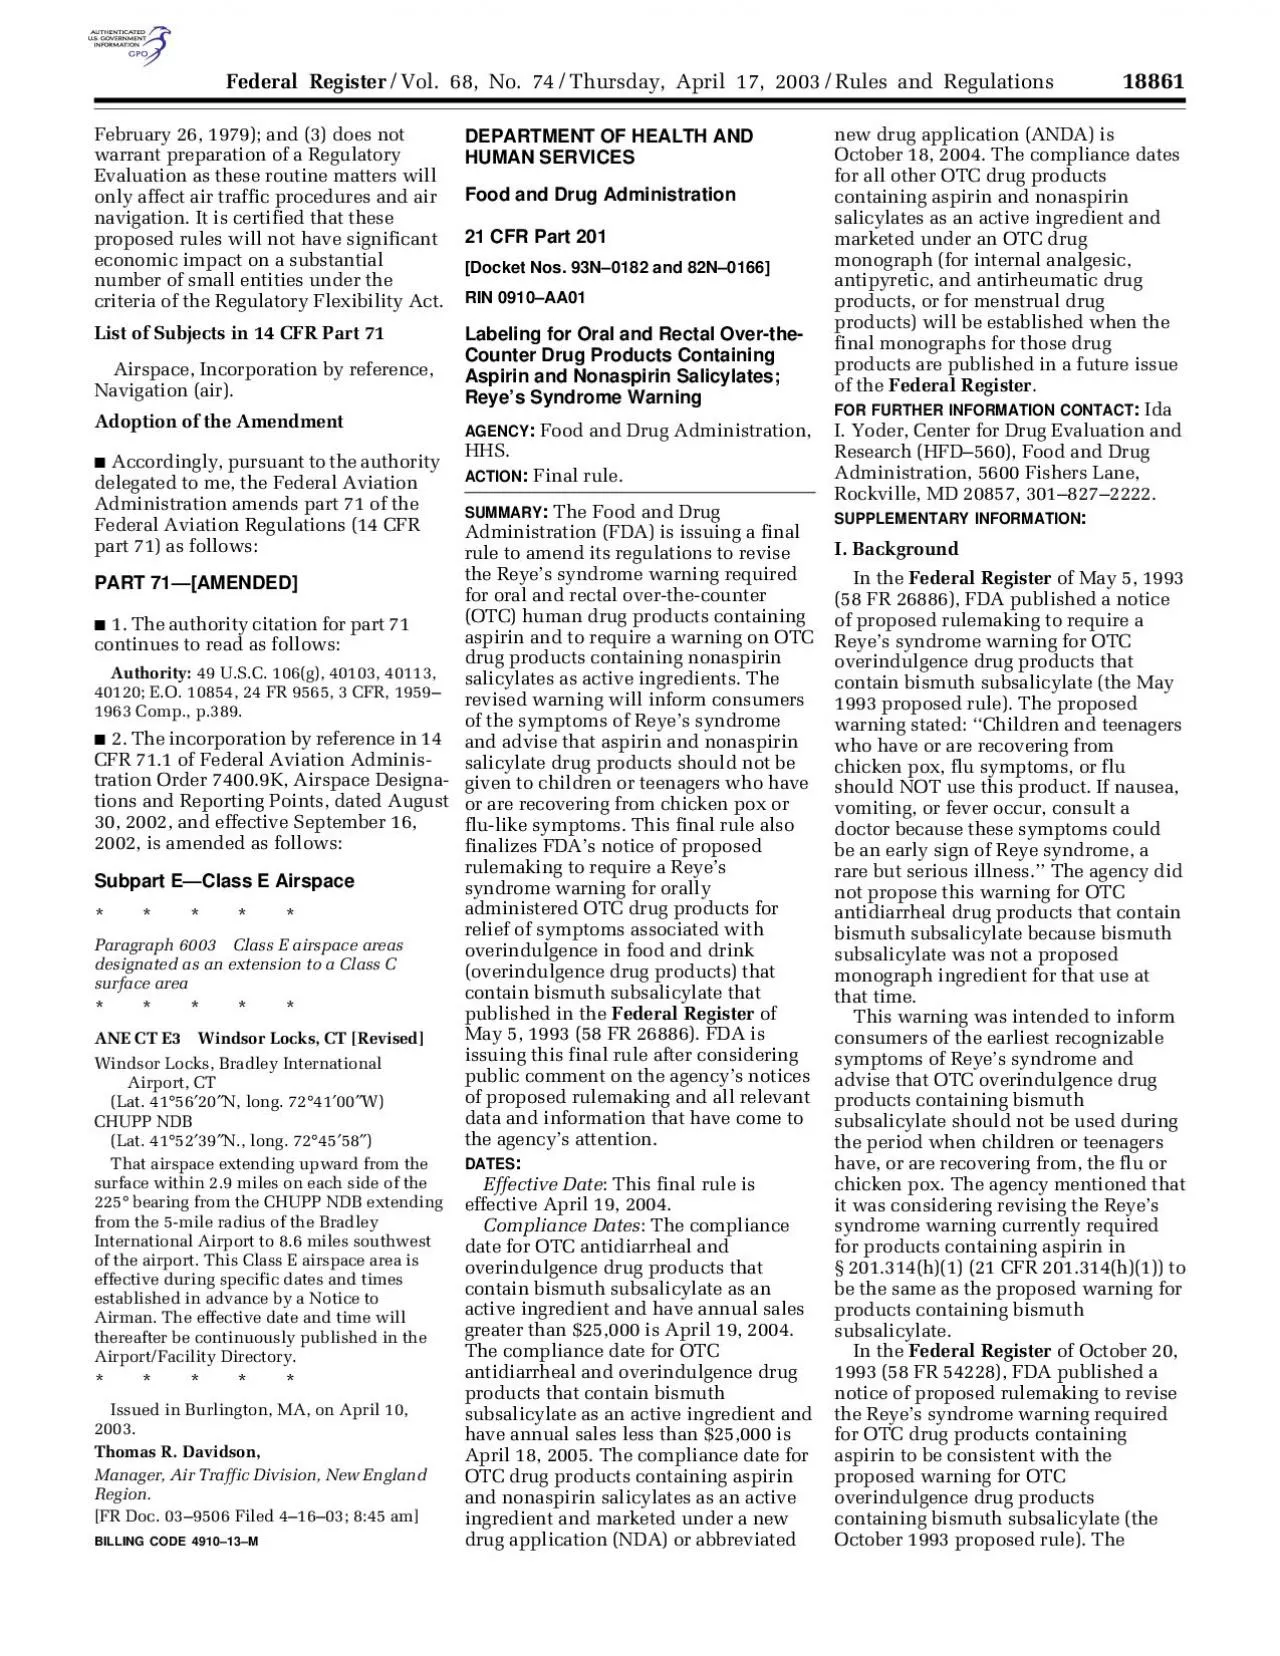 Vol 68 No 74Thursday April 17 2003Rules and Regulations Rules